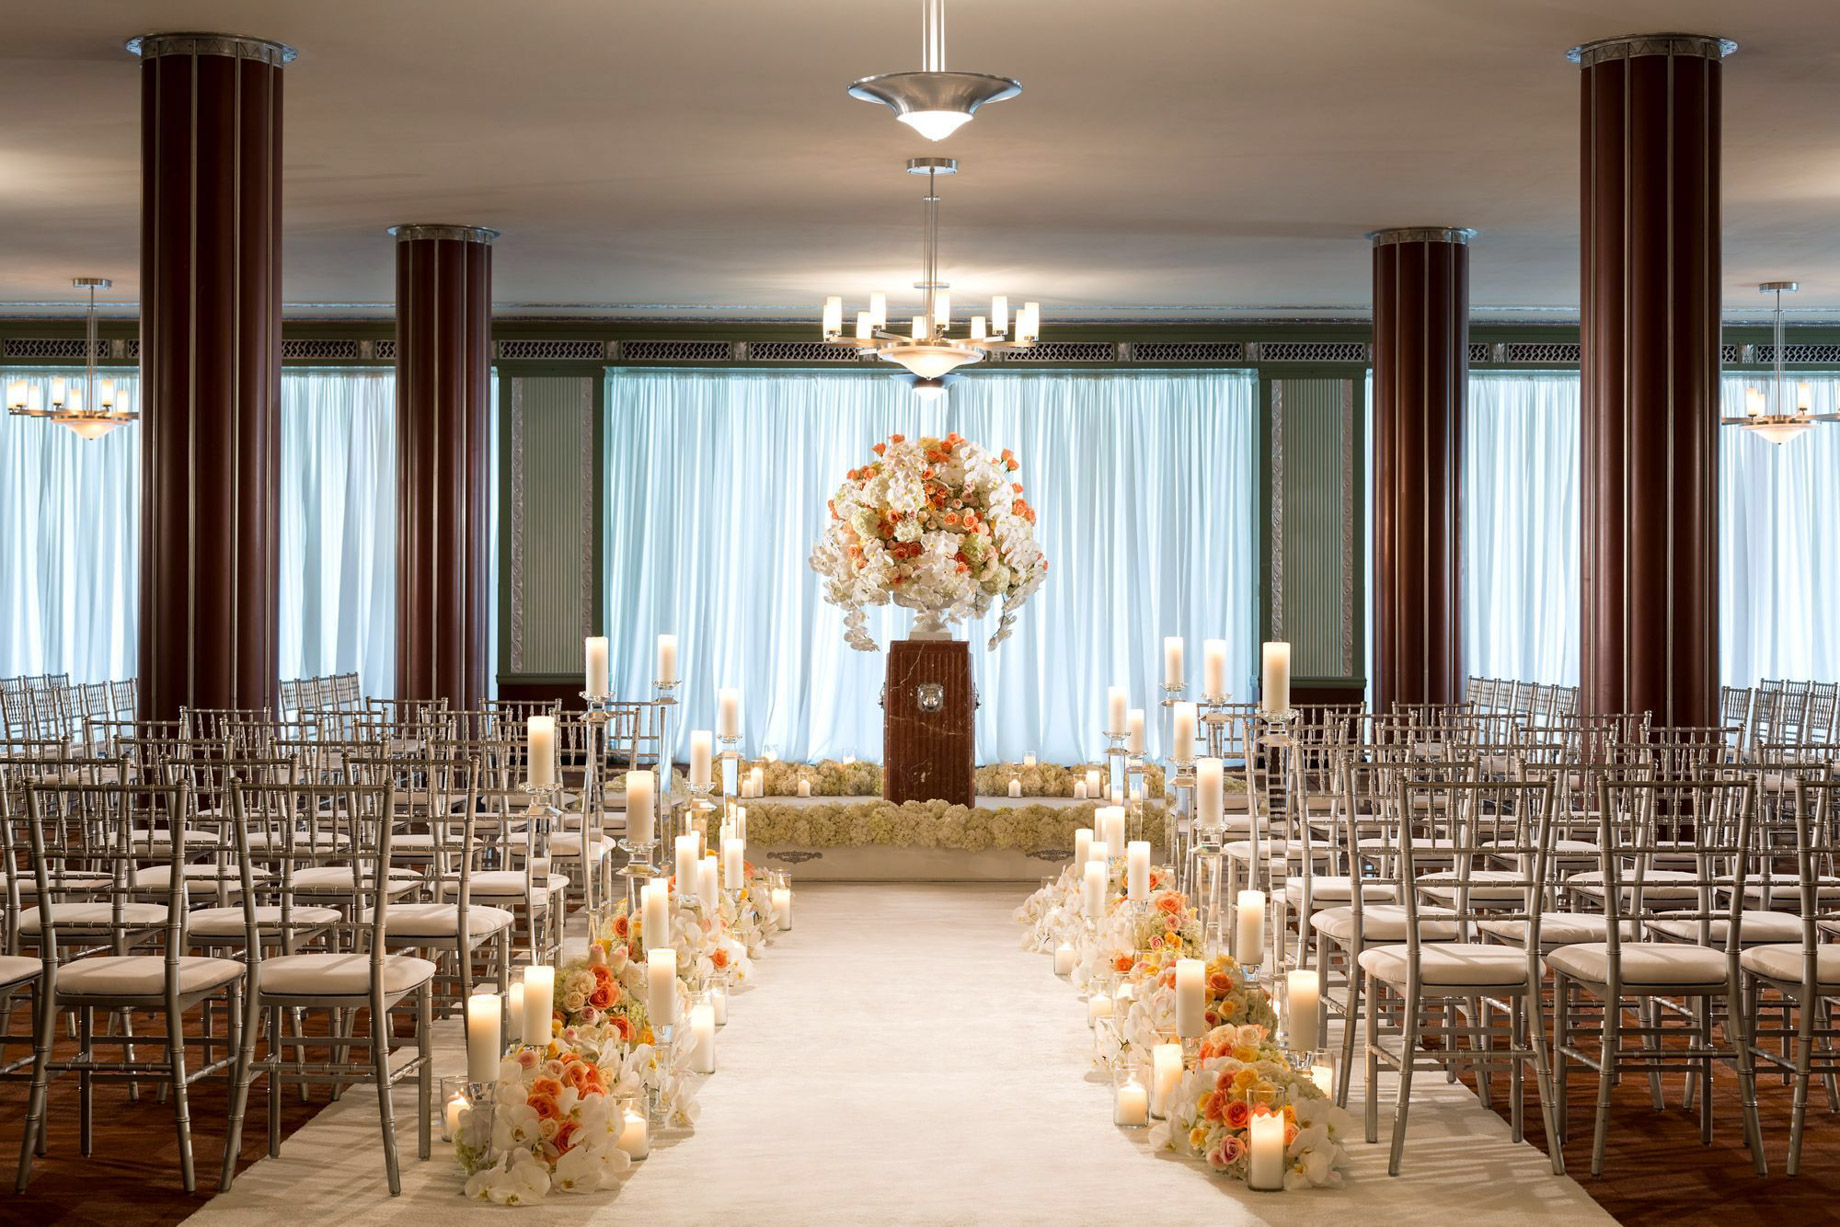 The Ritz-Carlton, Cleveland Hotel - Clevelend, OH, USA - Ballroom Wedding